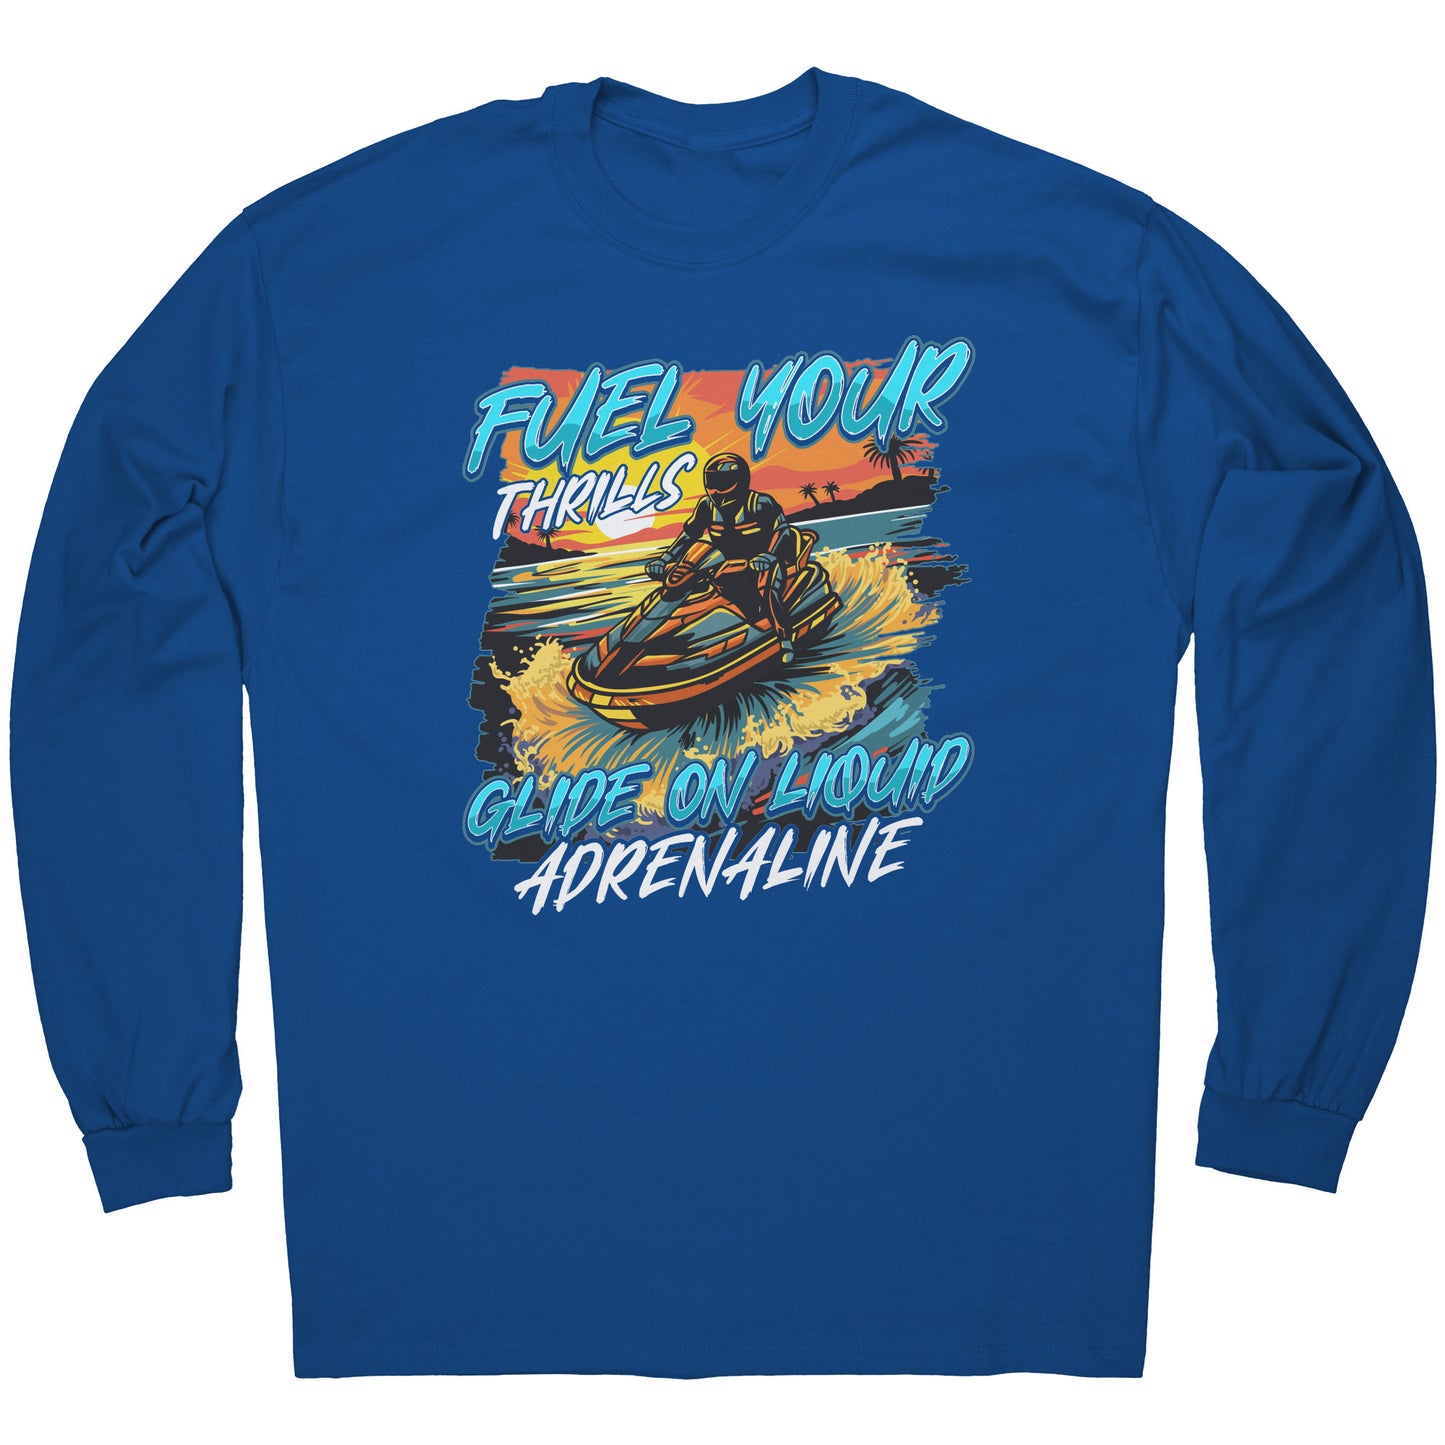 Fuel Your Thrills - Jetski Clothing Jet Skiing Watercraft T-Shirt